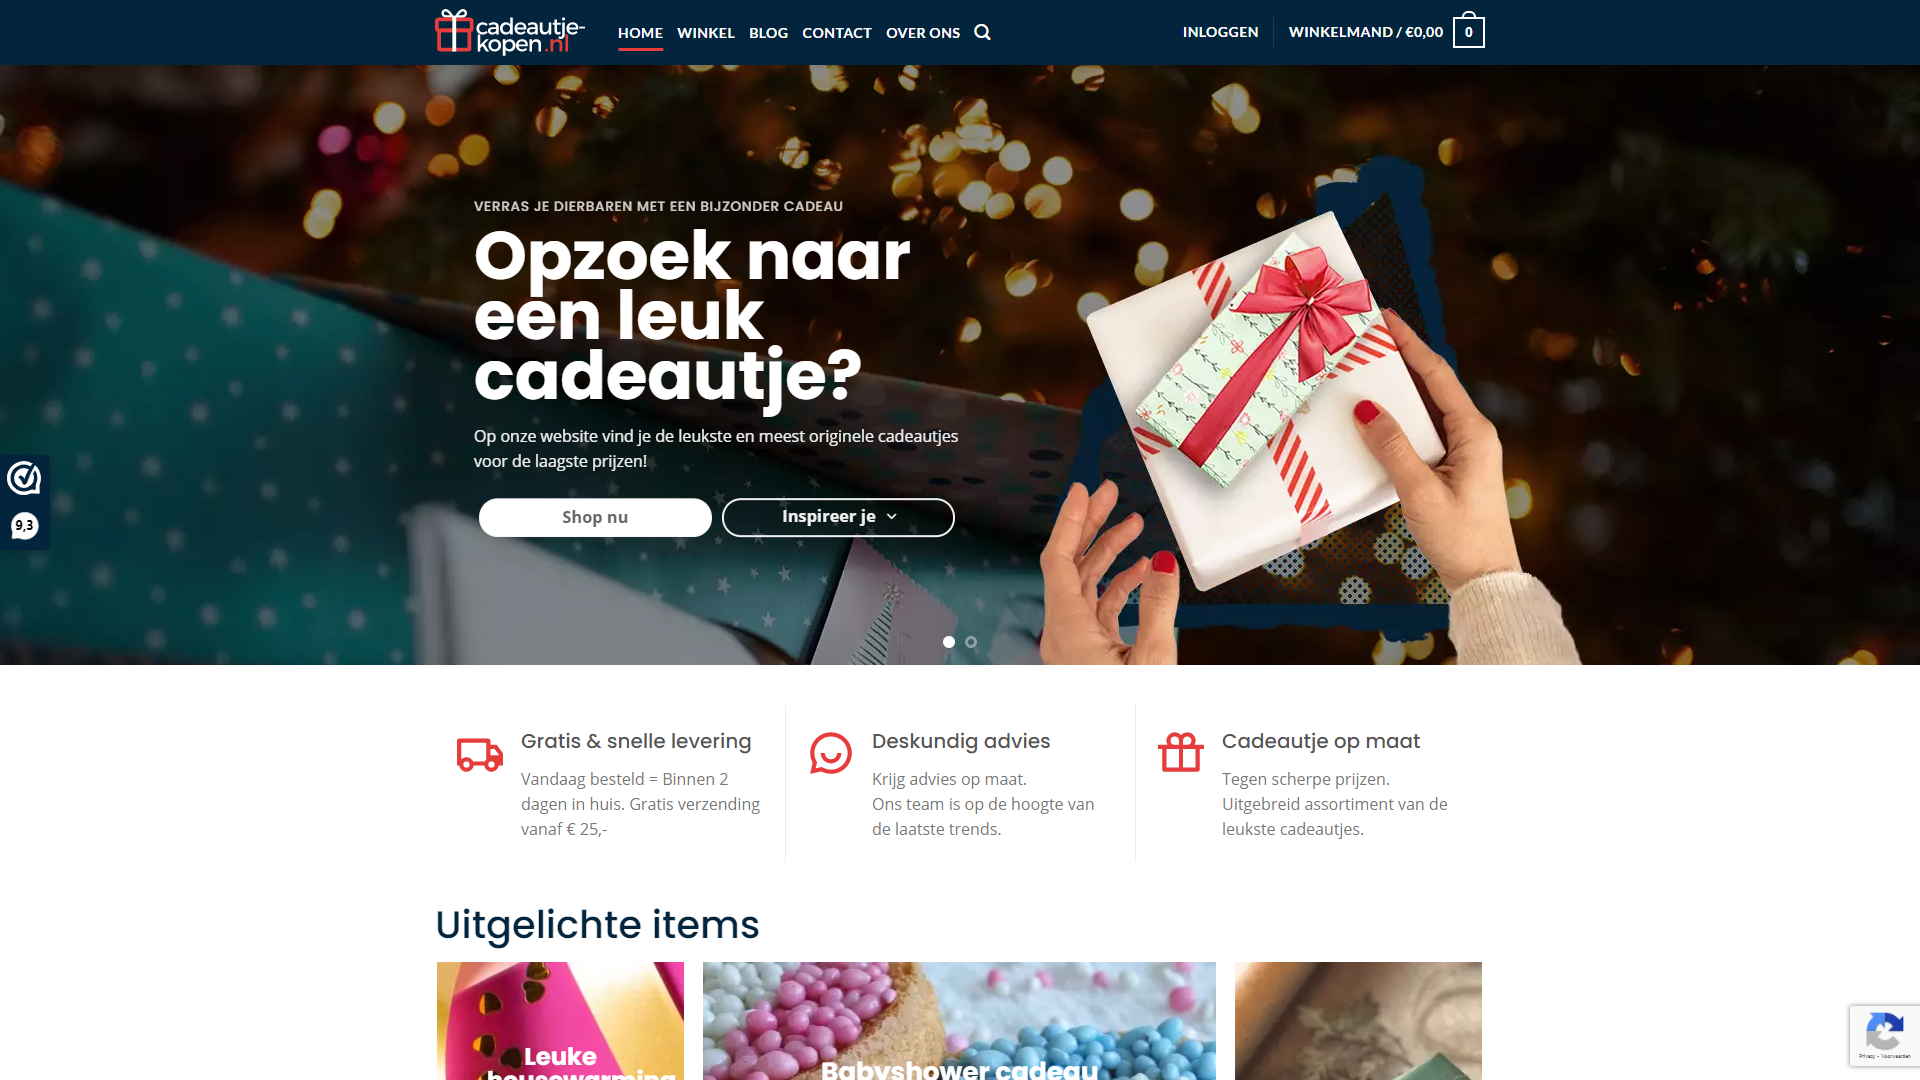 Landing page of cadeautje-kopen.nl